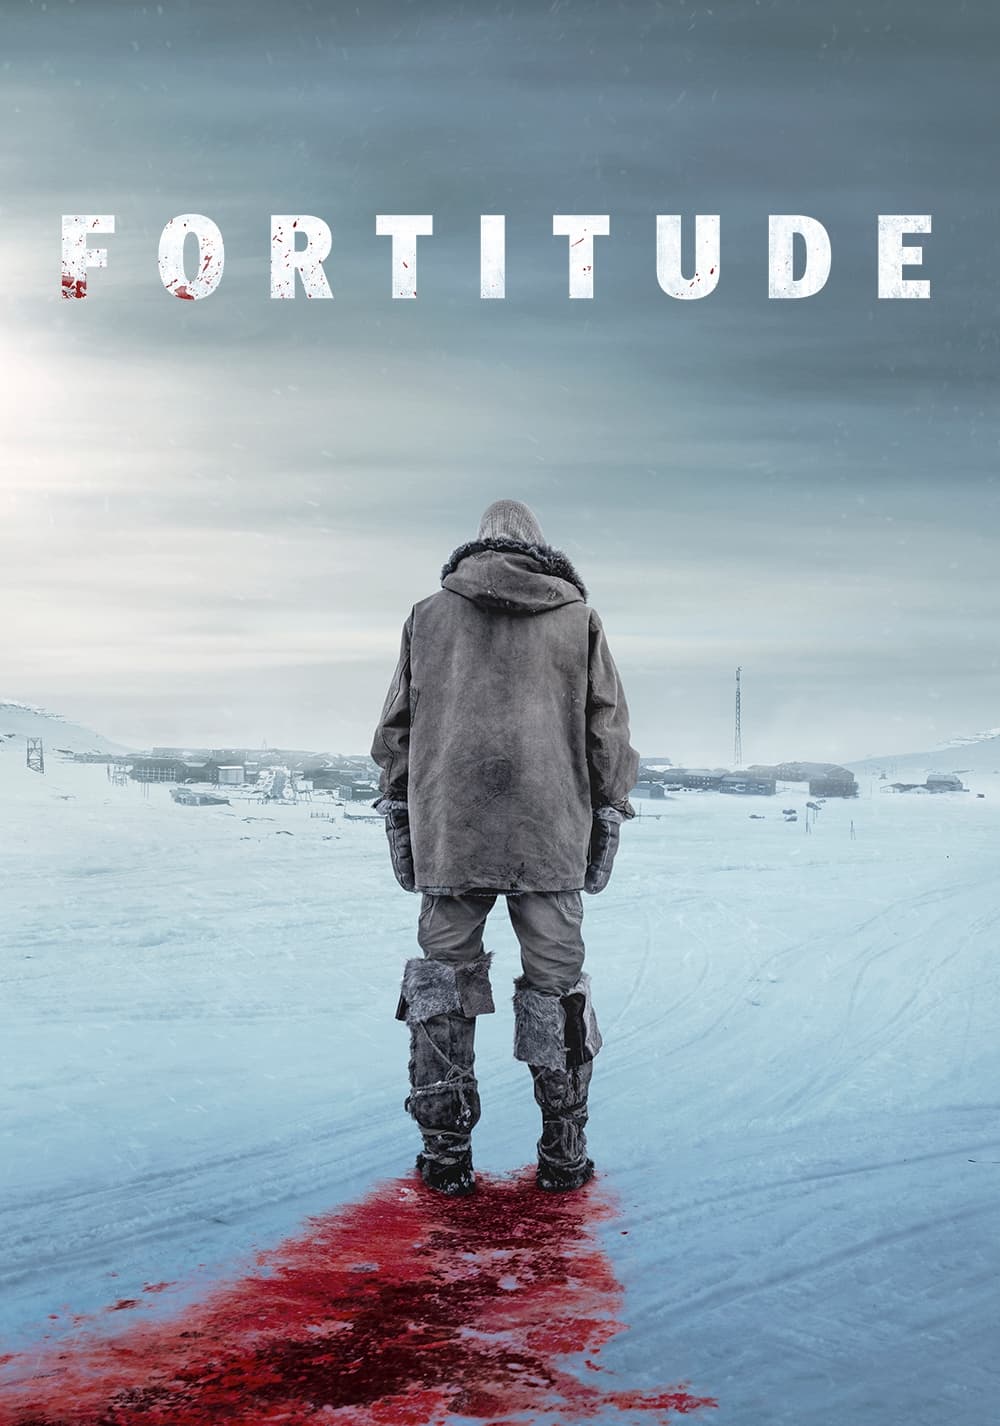 Fortitude (2015)